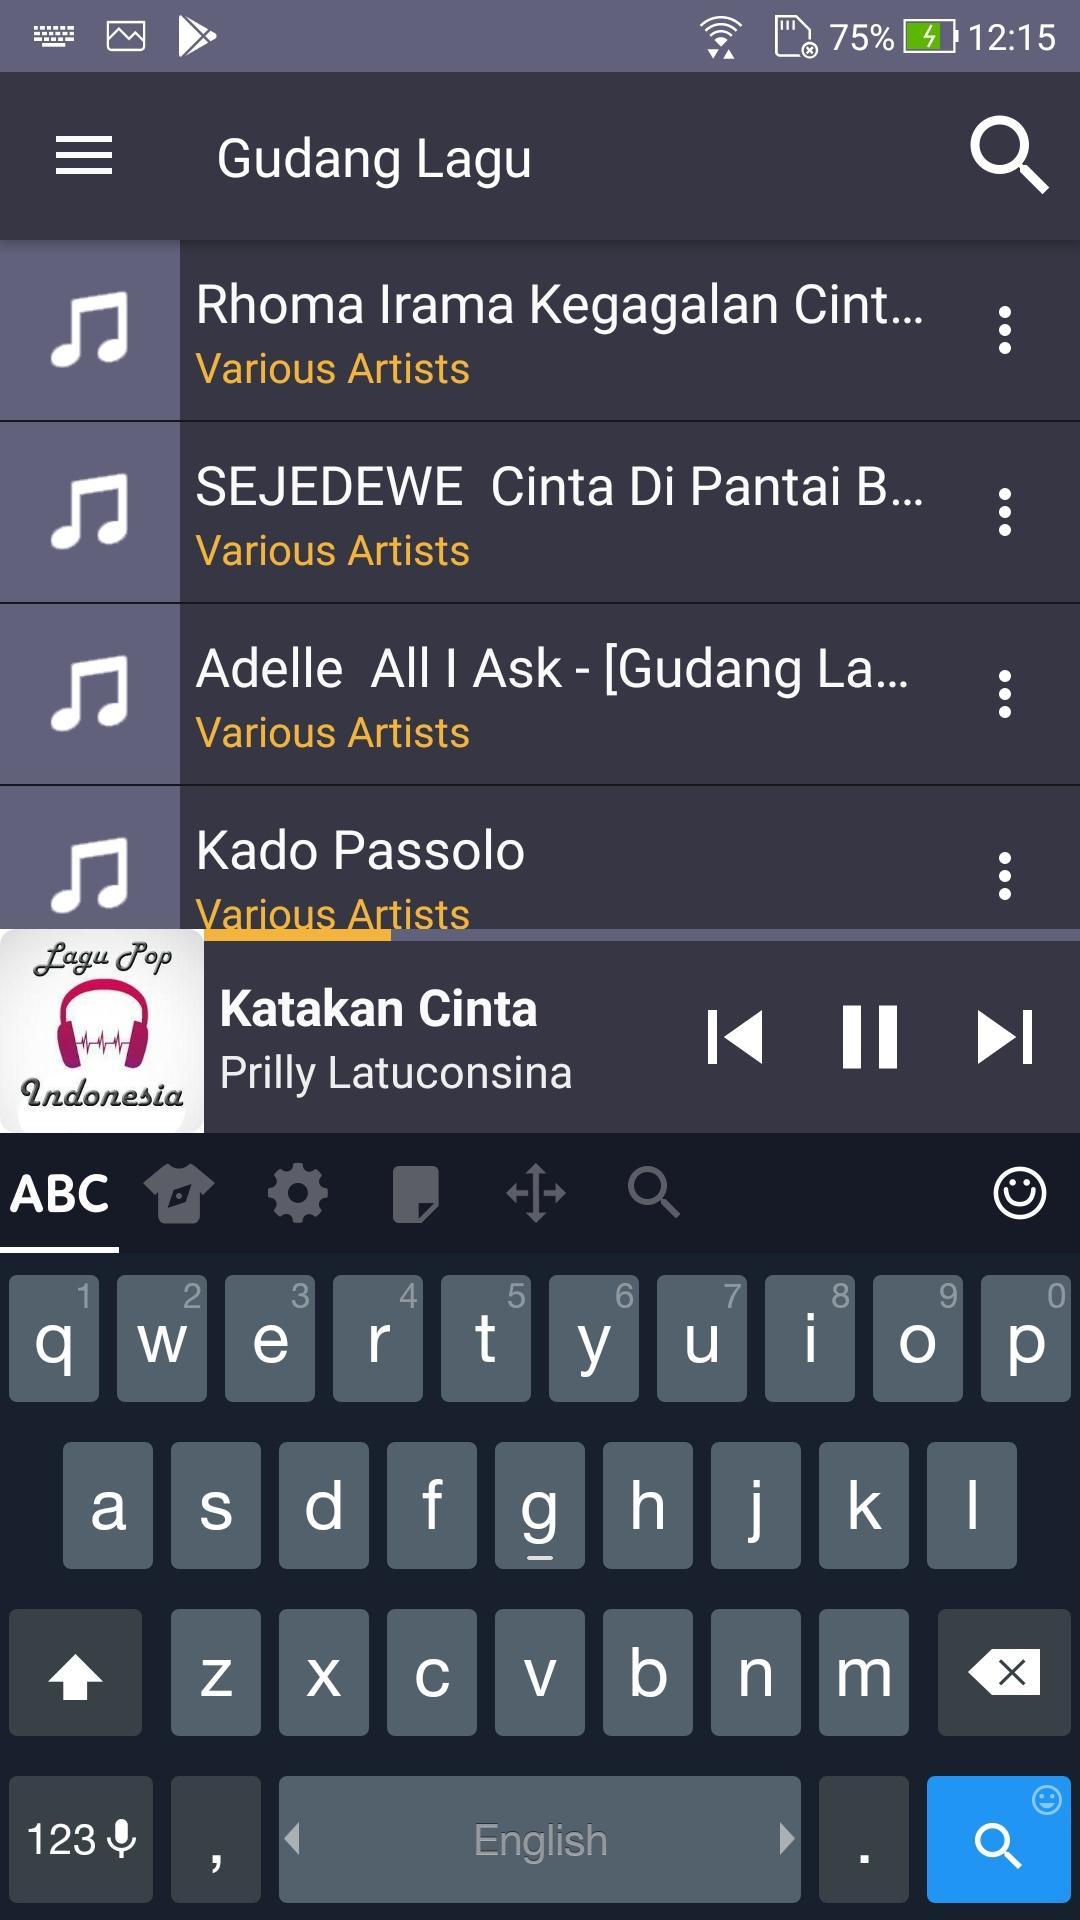 Gudang Lagu for Android - APK Download